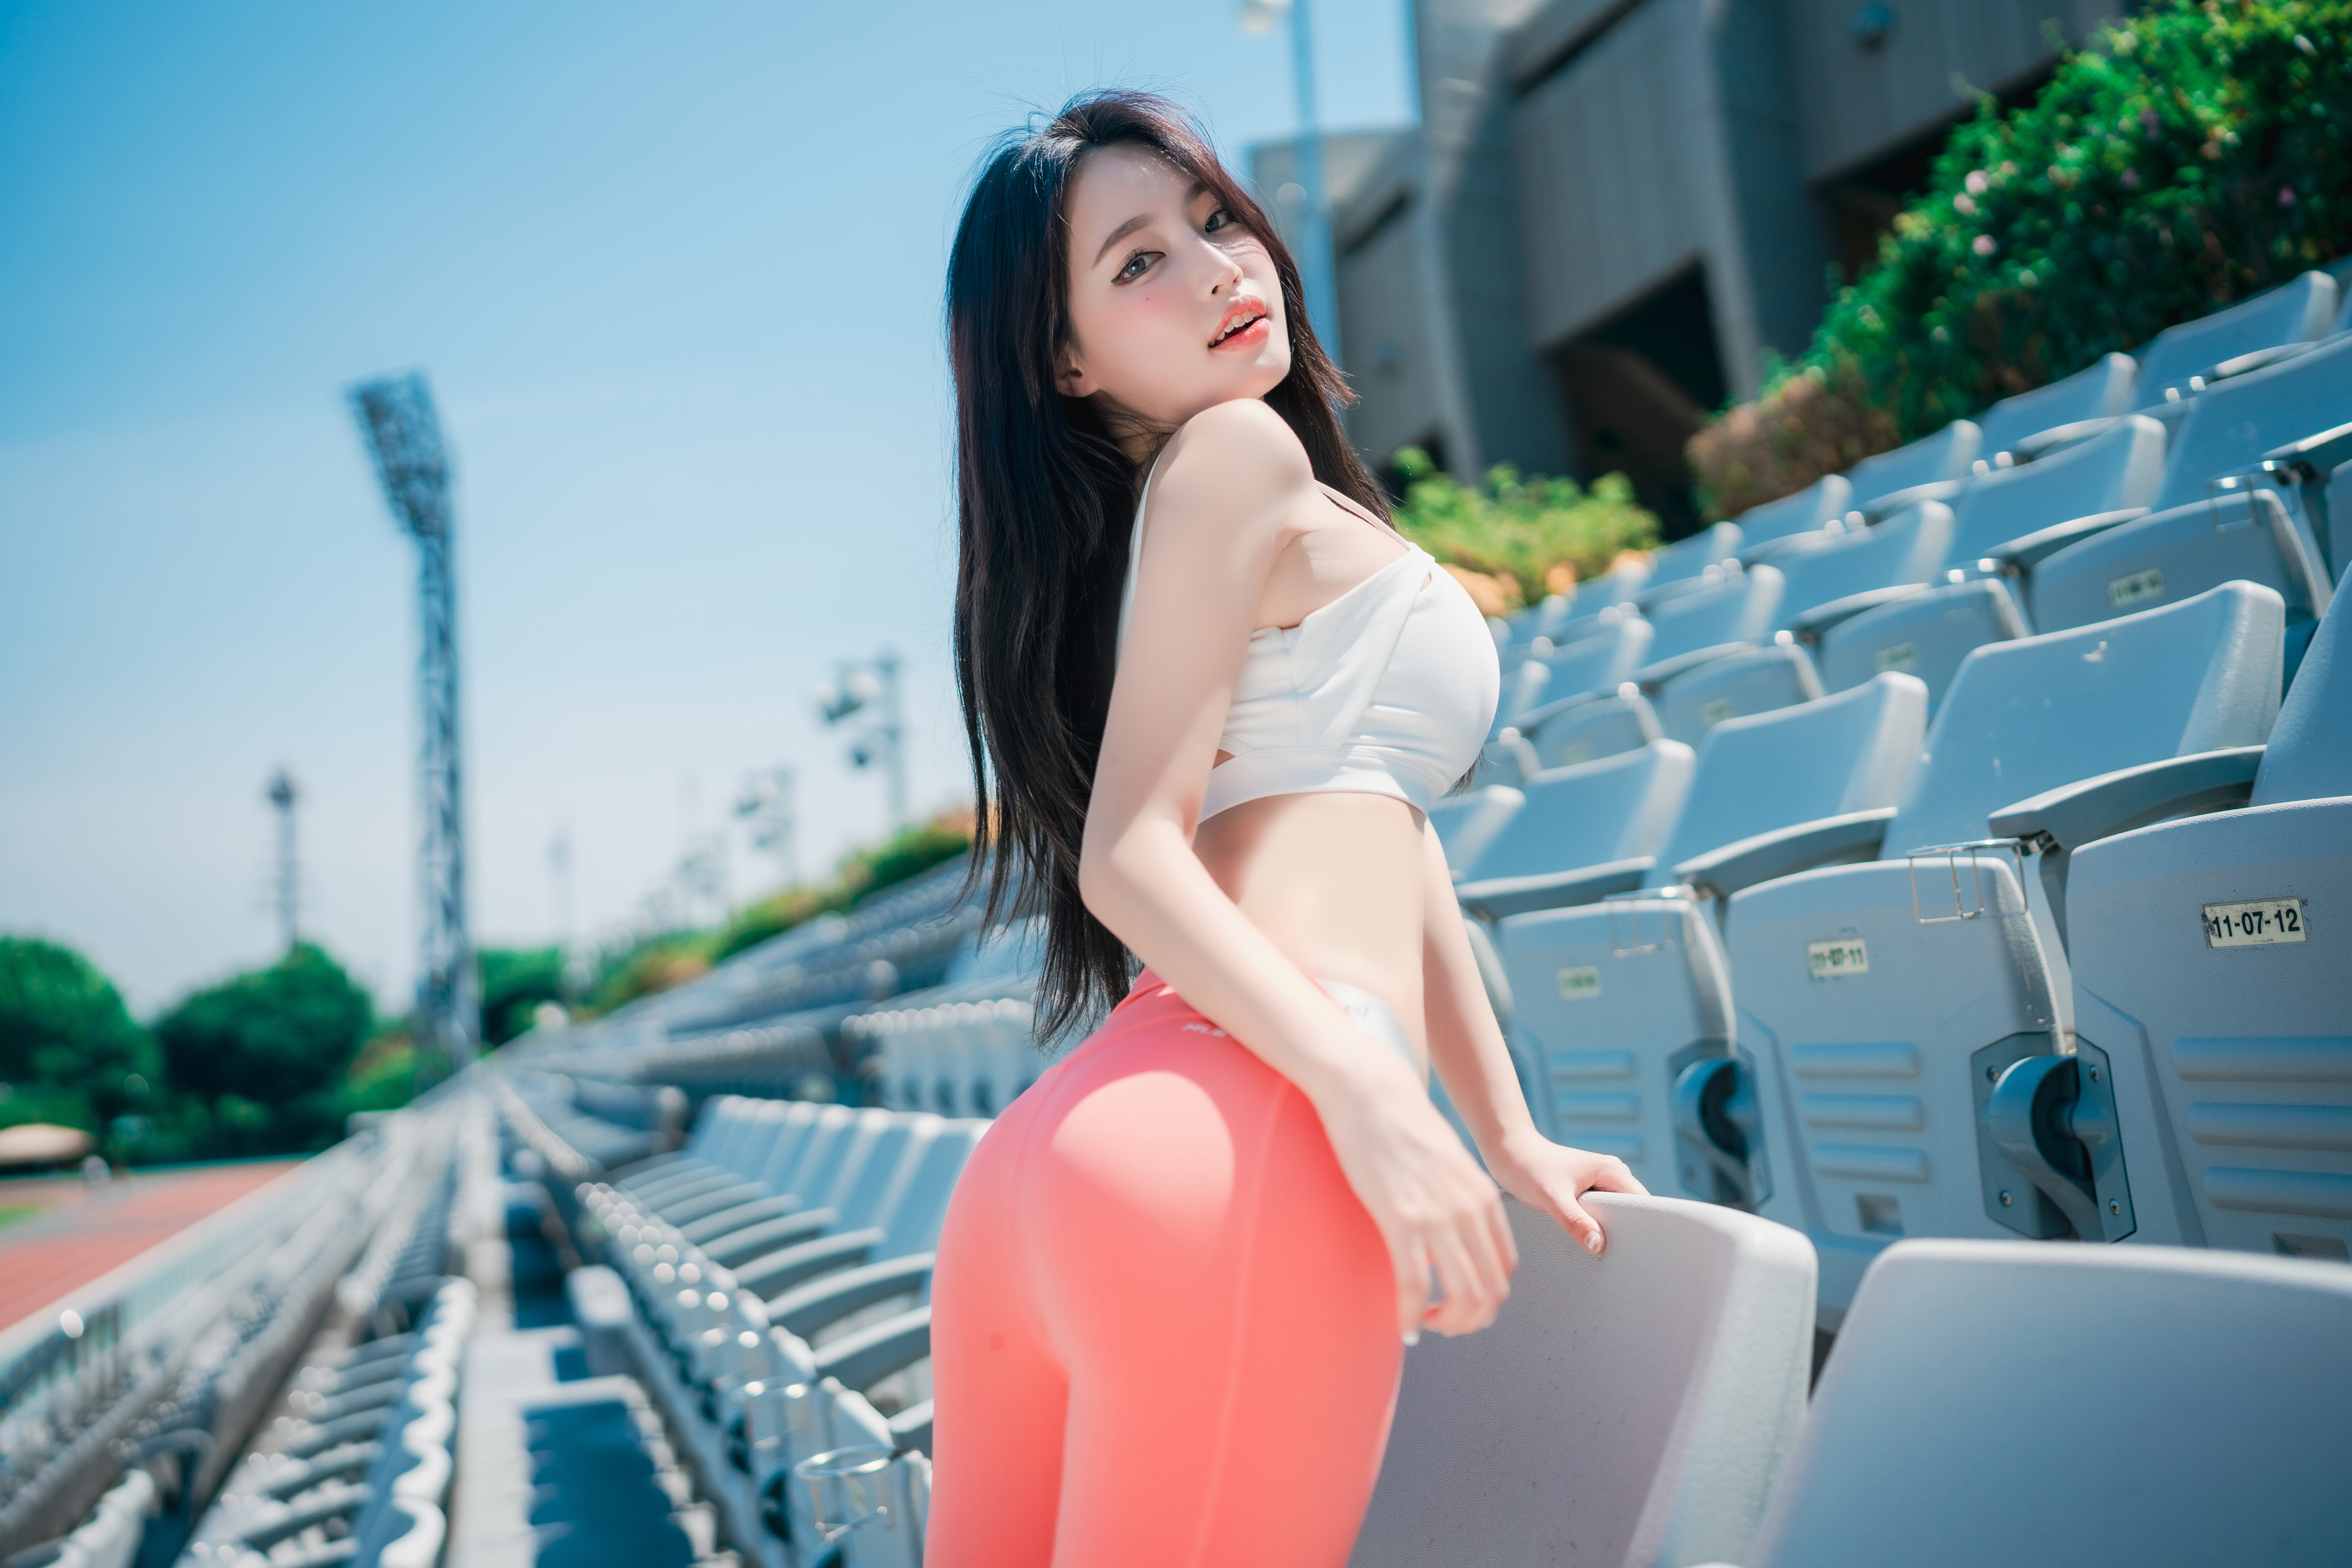 Women Model Asian Korean Women Sportswear Sports Leggings White Tops Women Outdoors Looking At Viewe 6000x4000